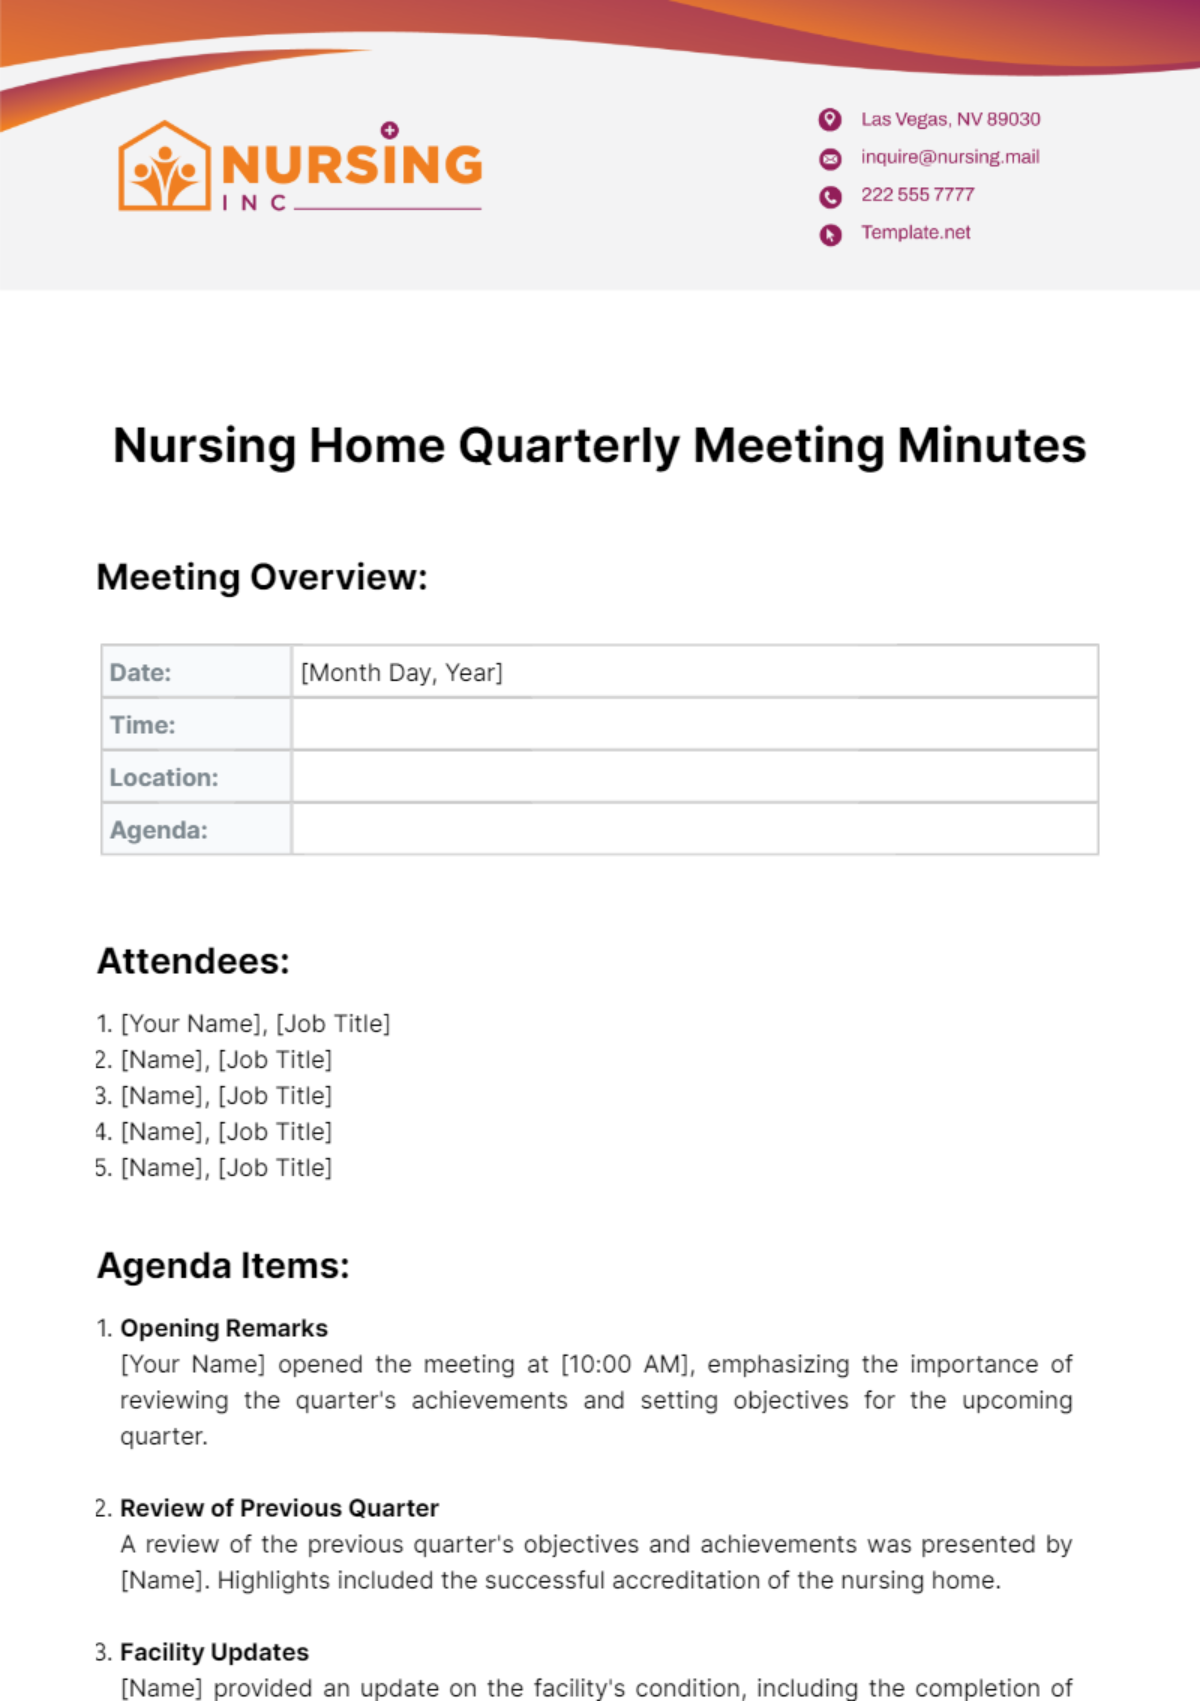 Nursing Home Quarterly Meeting Minutes Template